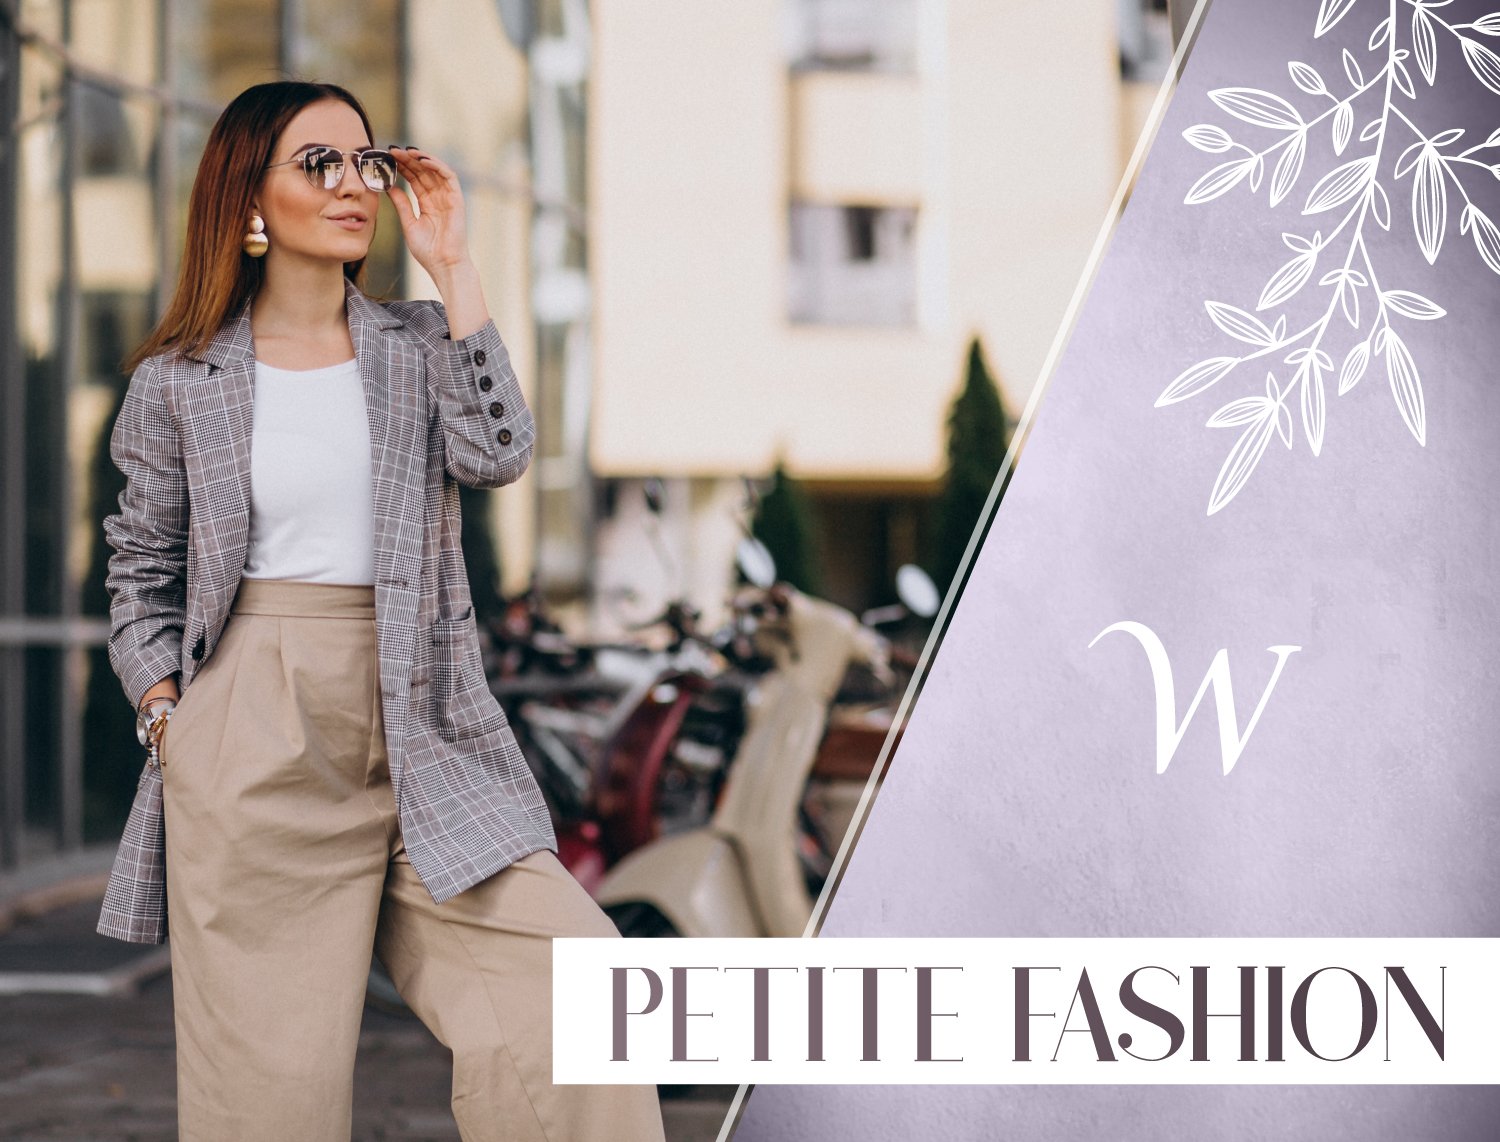 Fashion Tips For Petite Women, Petite Styling